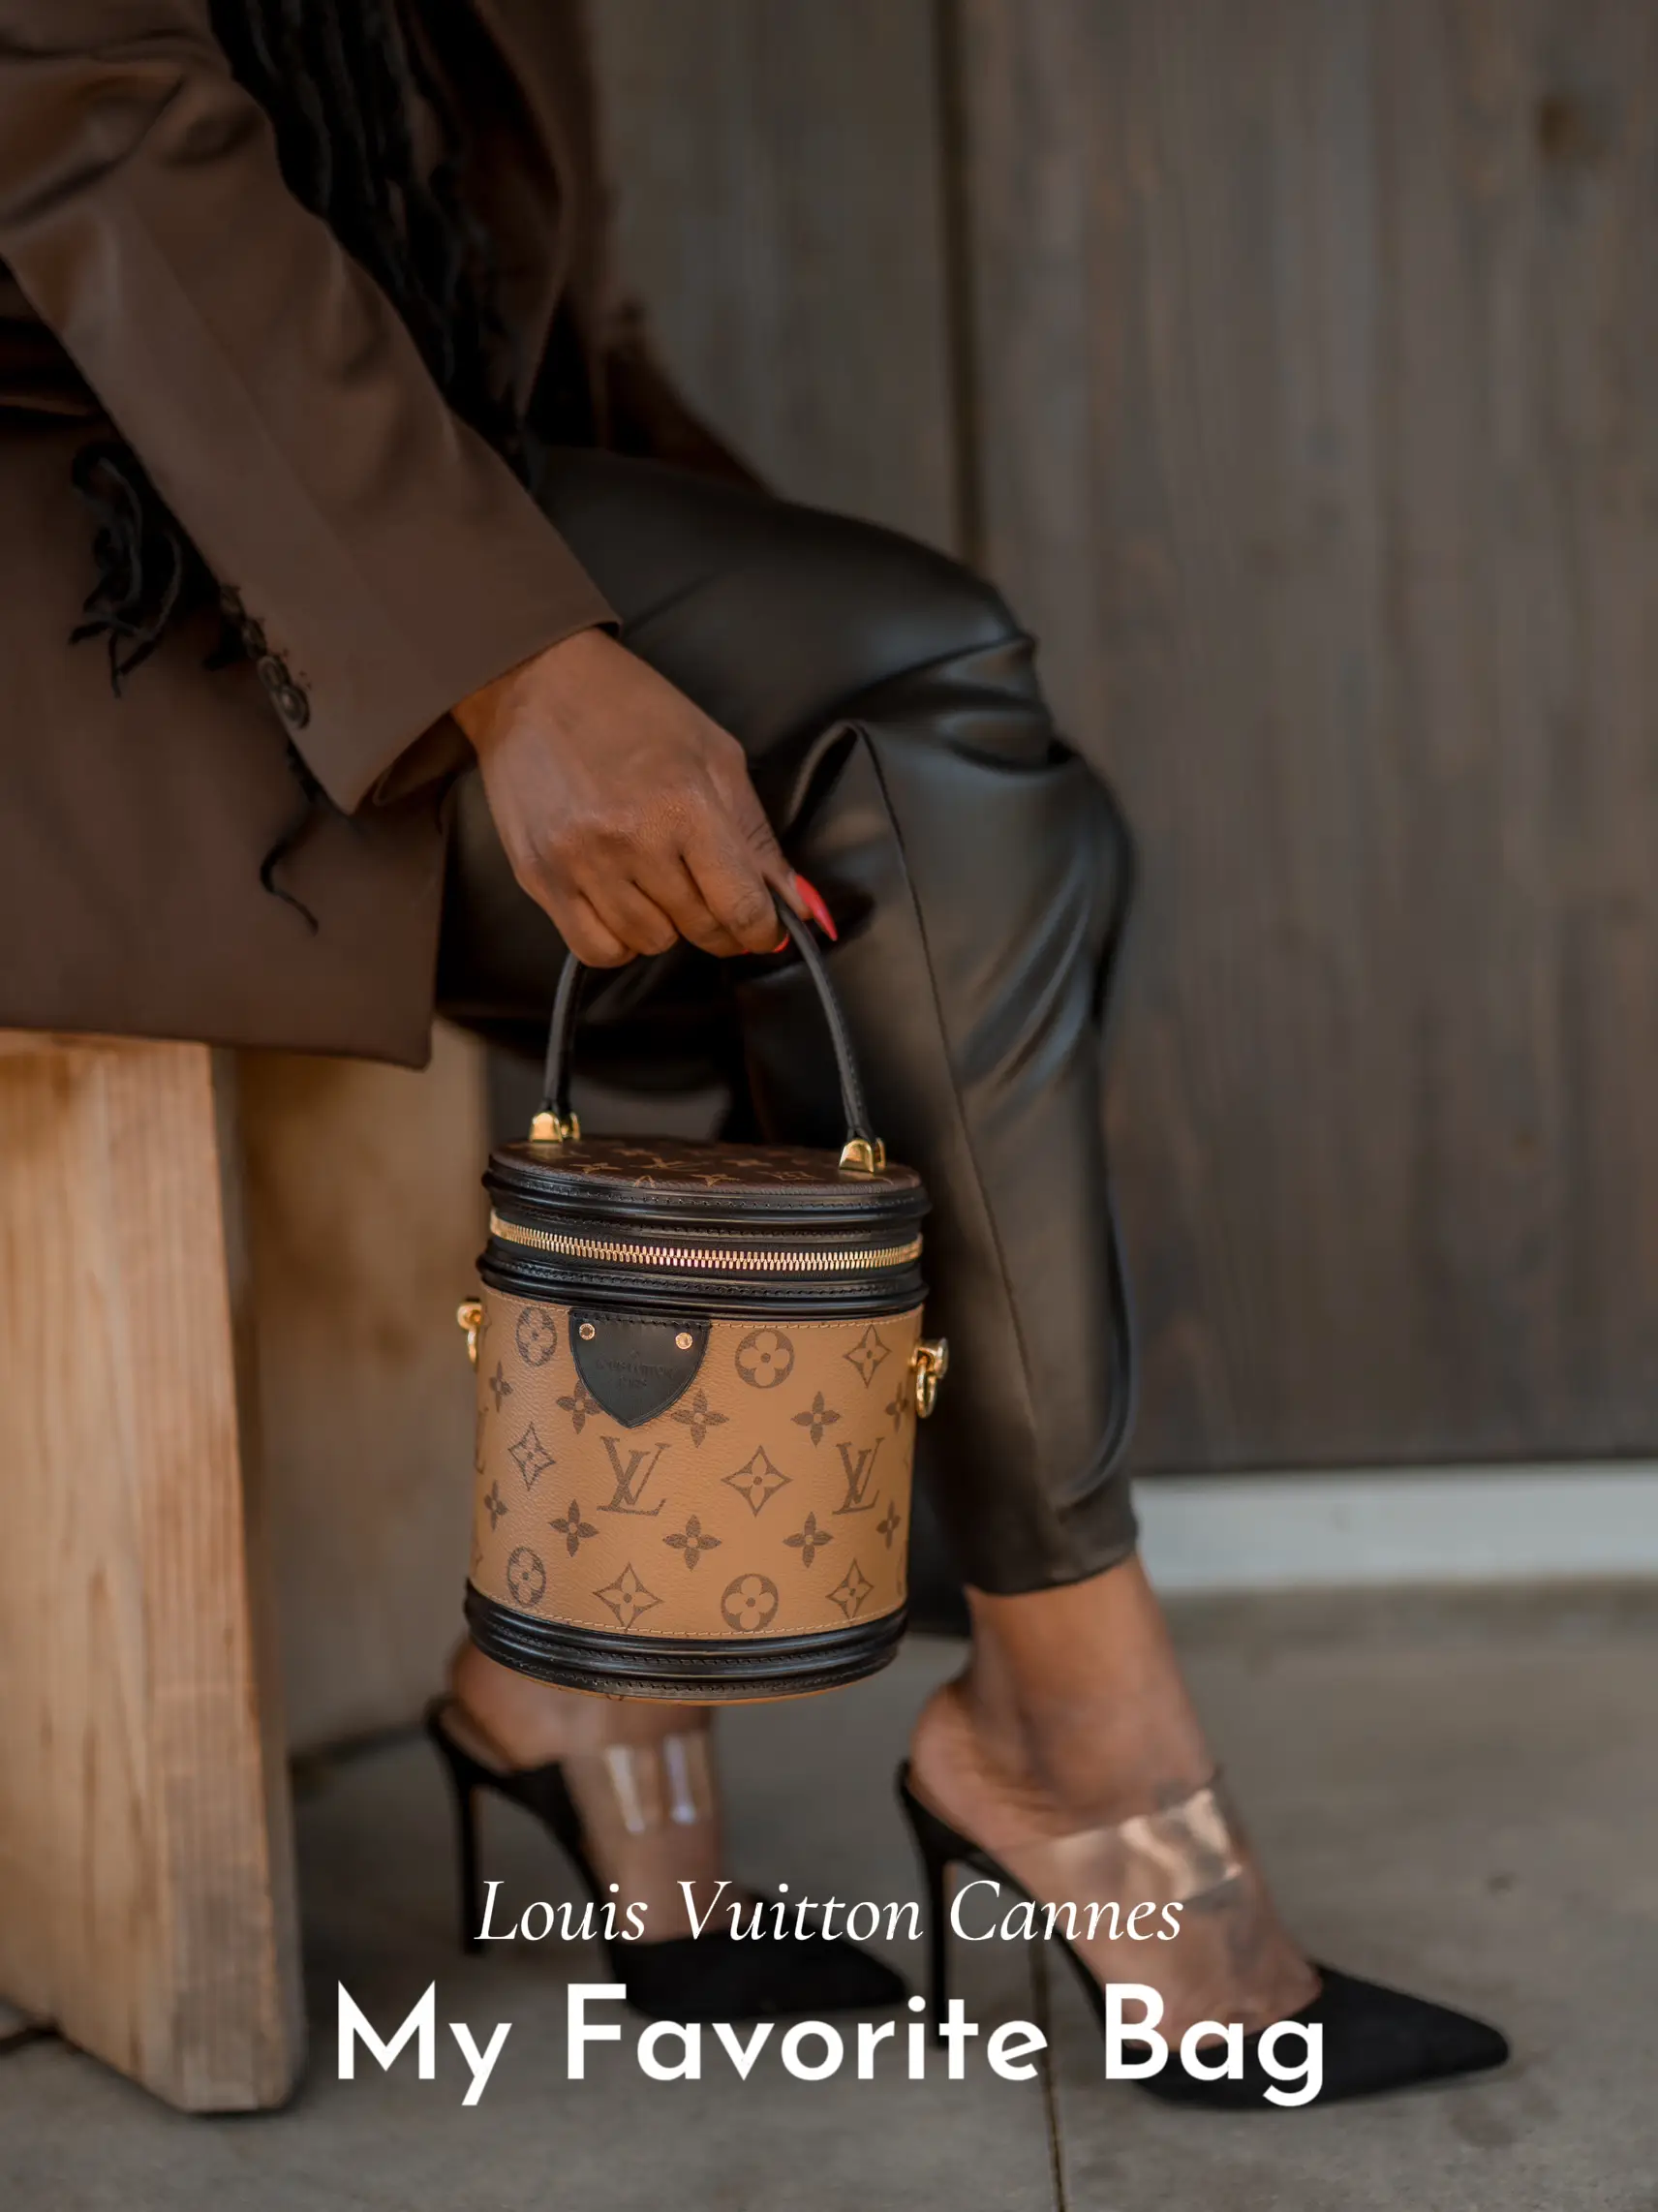 Vintage Louis Vuitton Cannes bag / HOW TO ATTACH A STRAP 